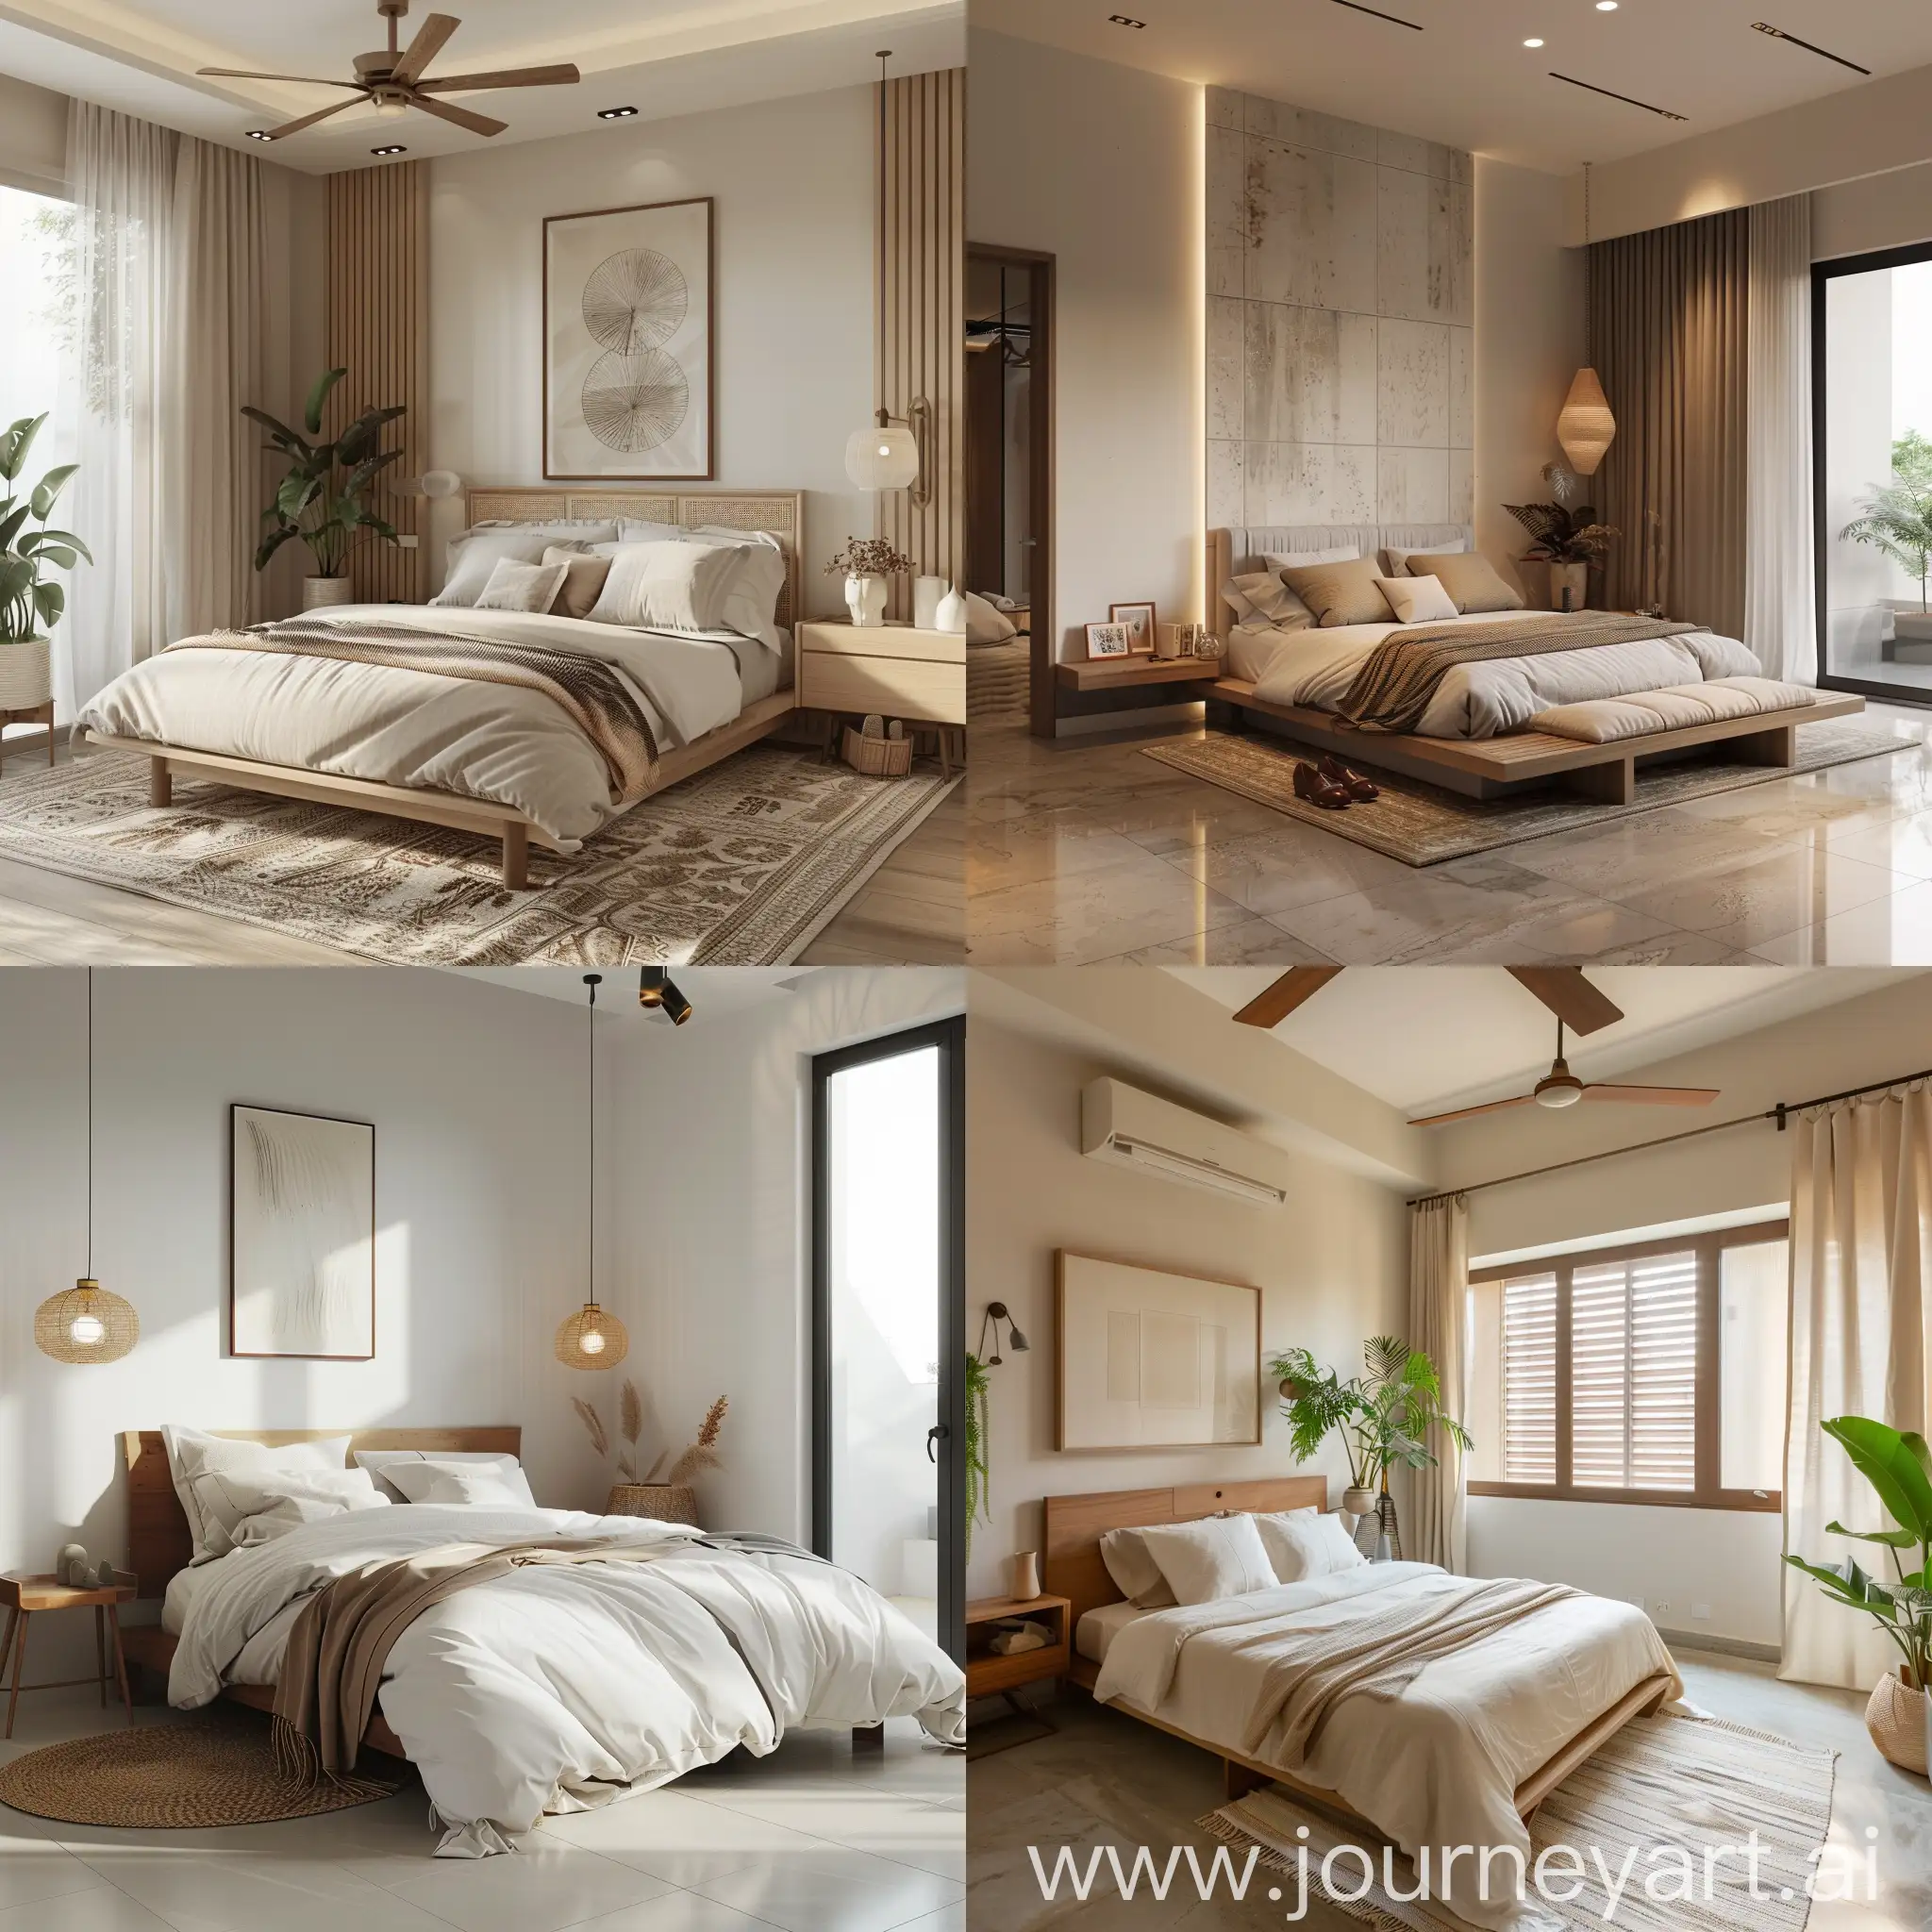 clean, minimalistic indian bedroom interior